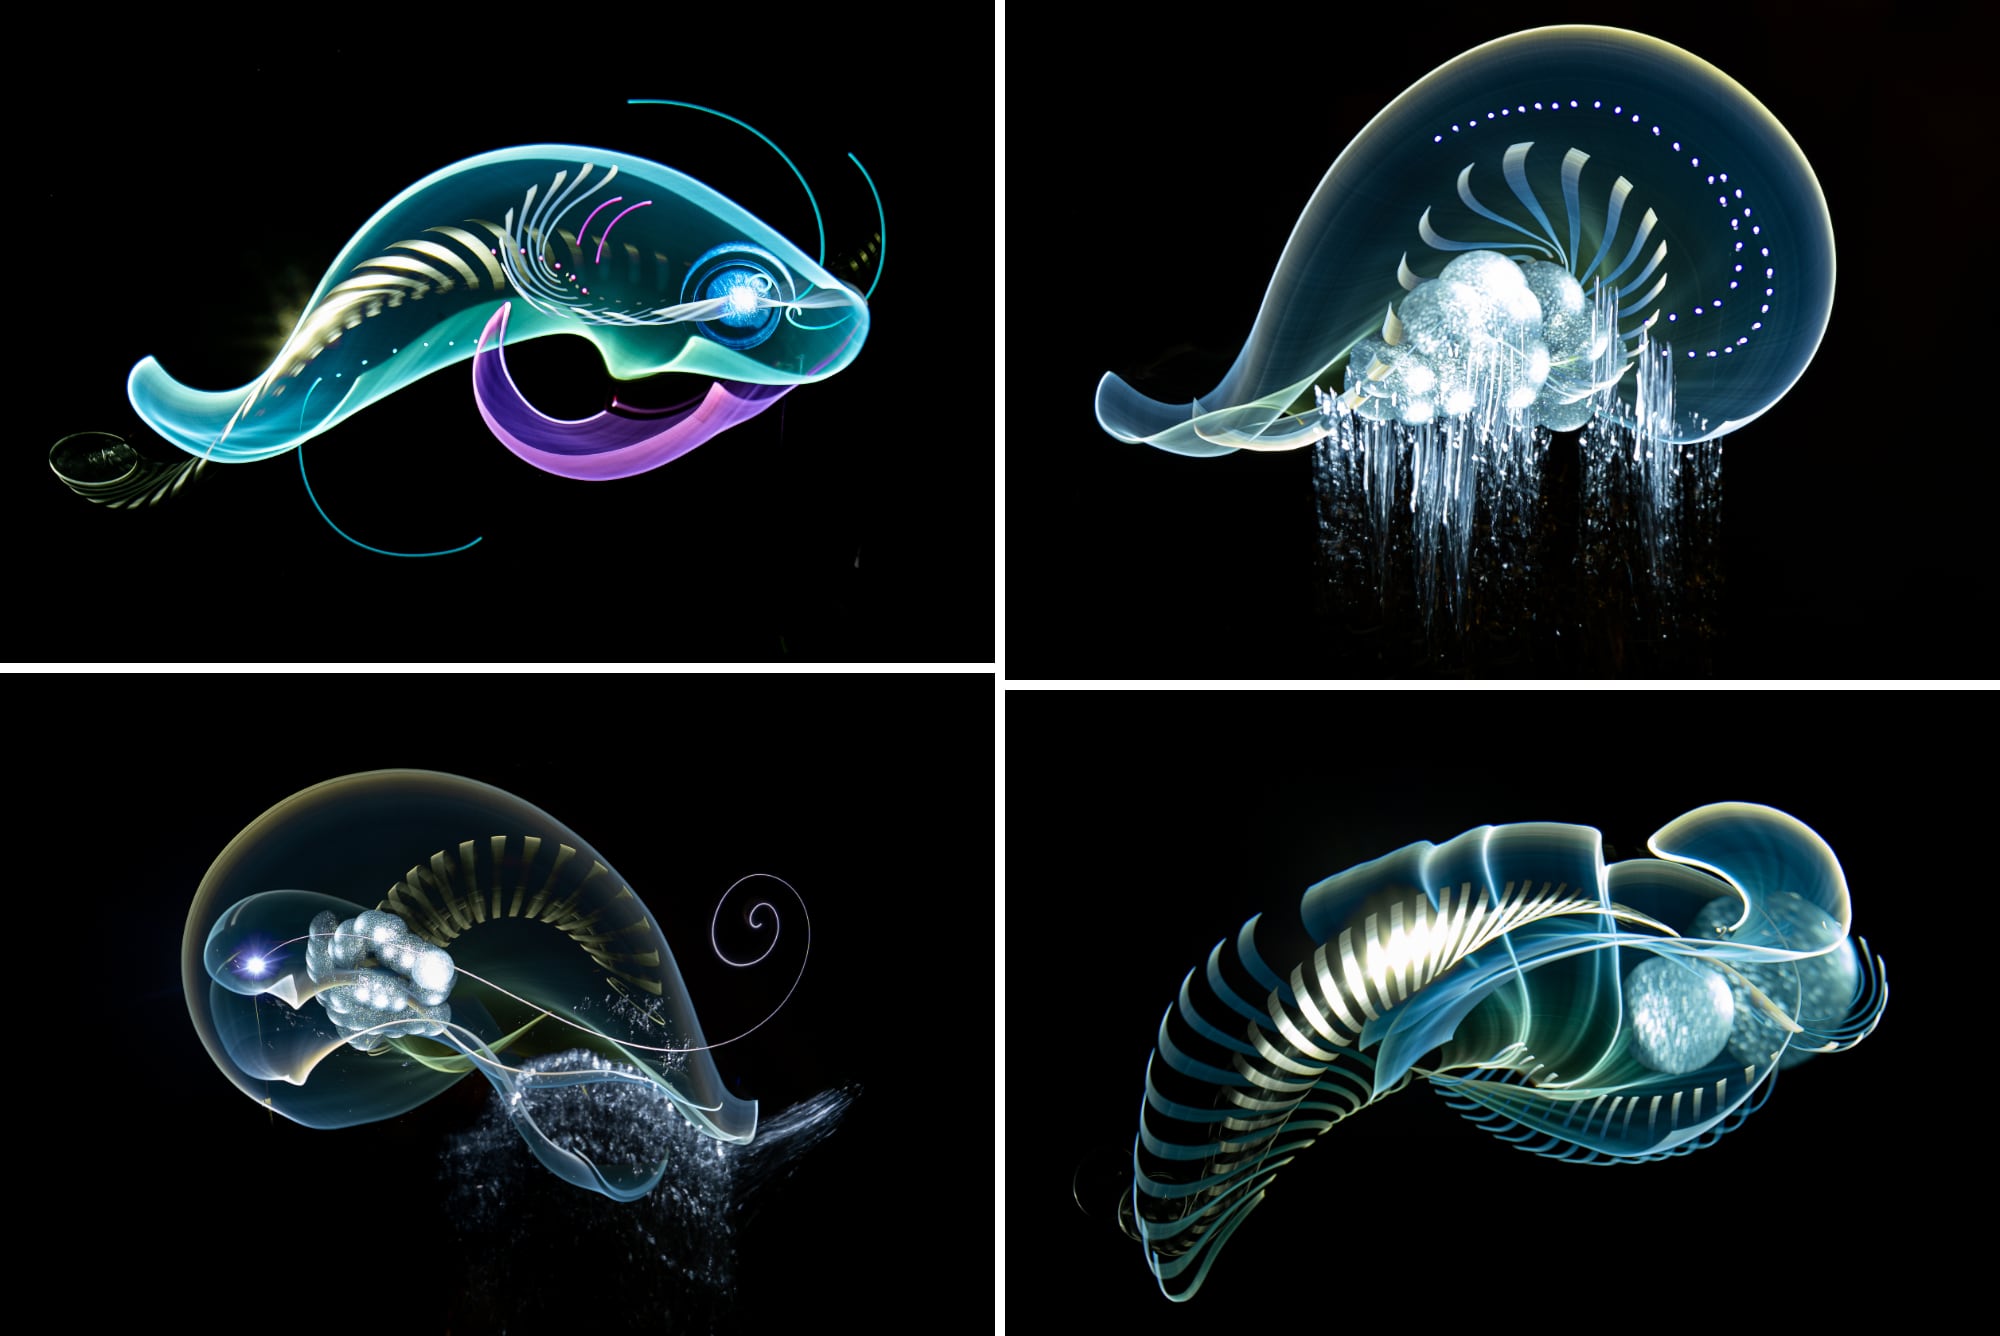 Four bright otherworldly marine animals on black backdrops